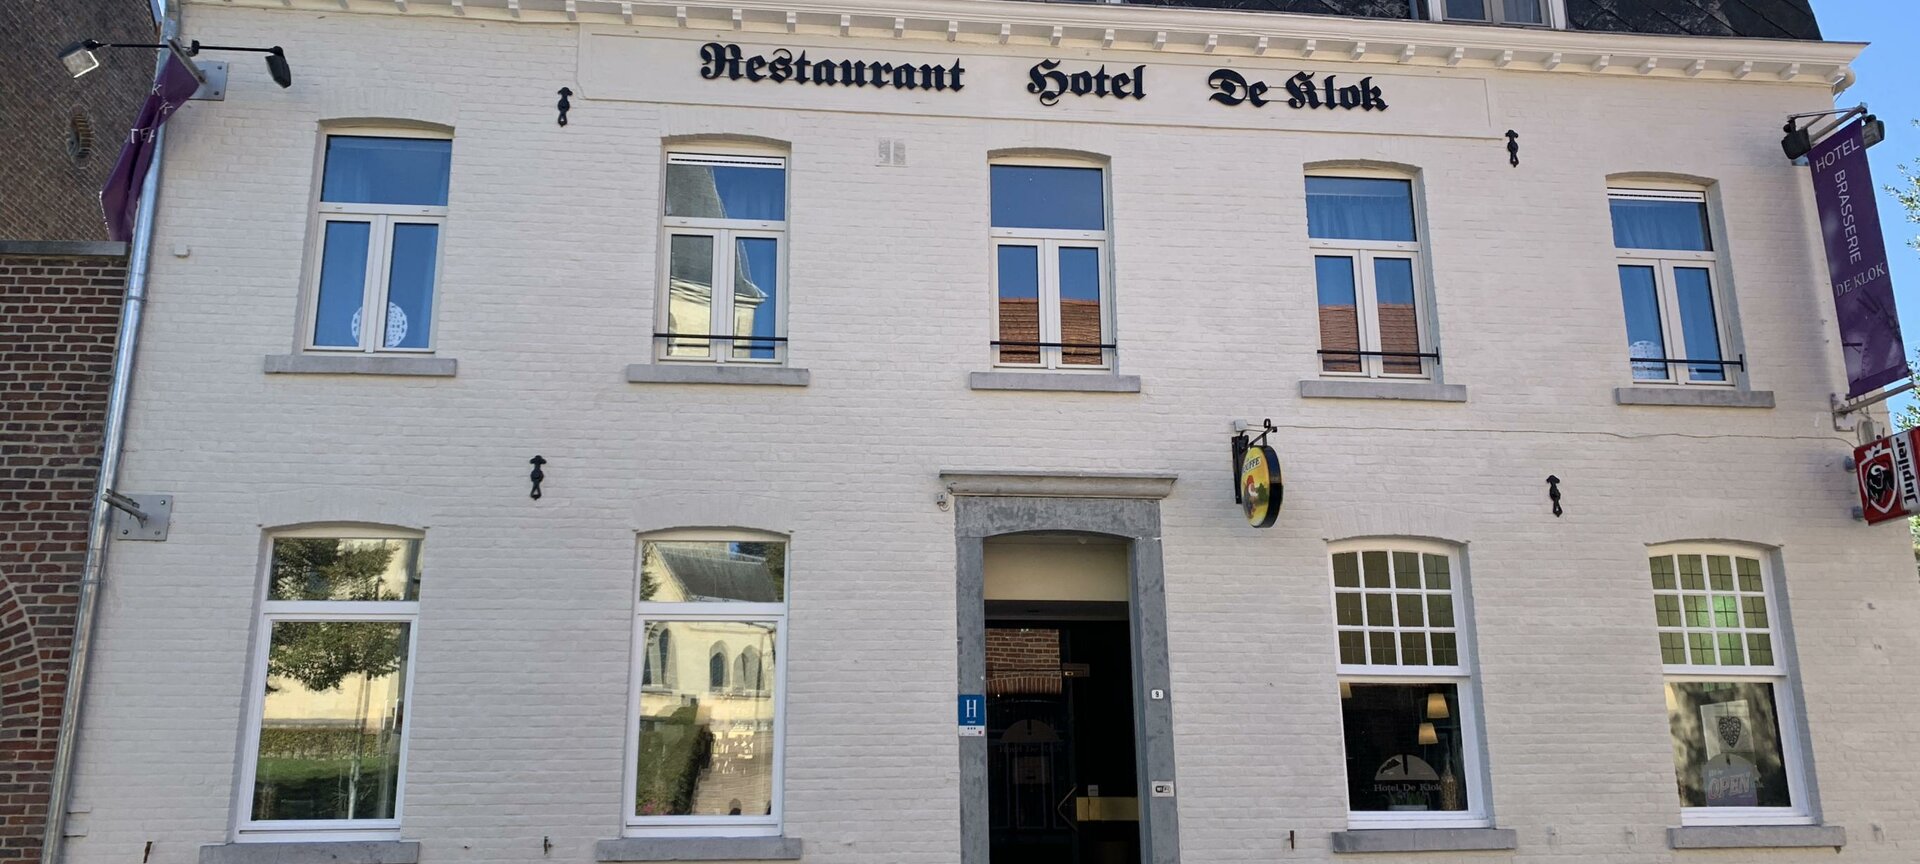 Brasserie - Hotel De Klok - Oude ingang, voorgevel